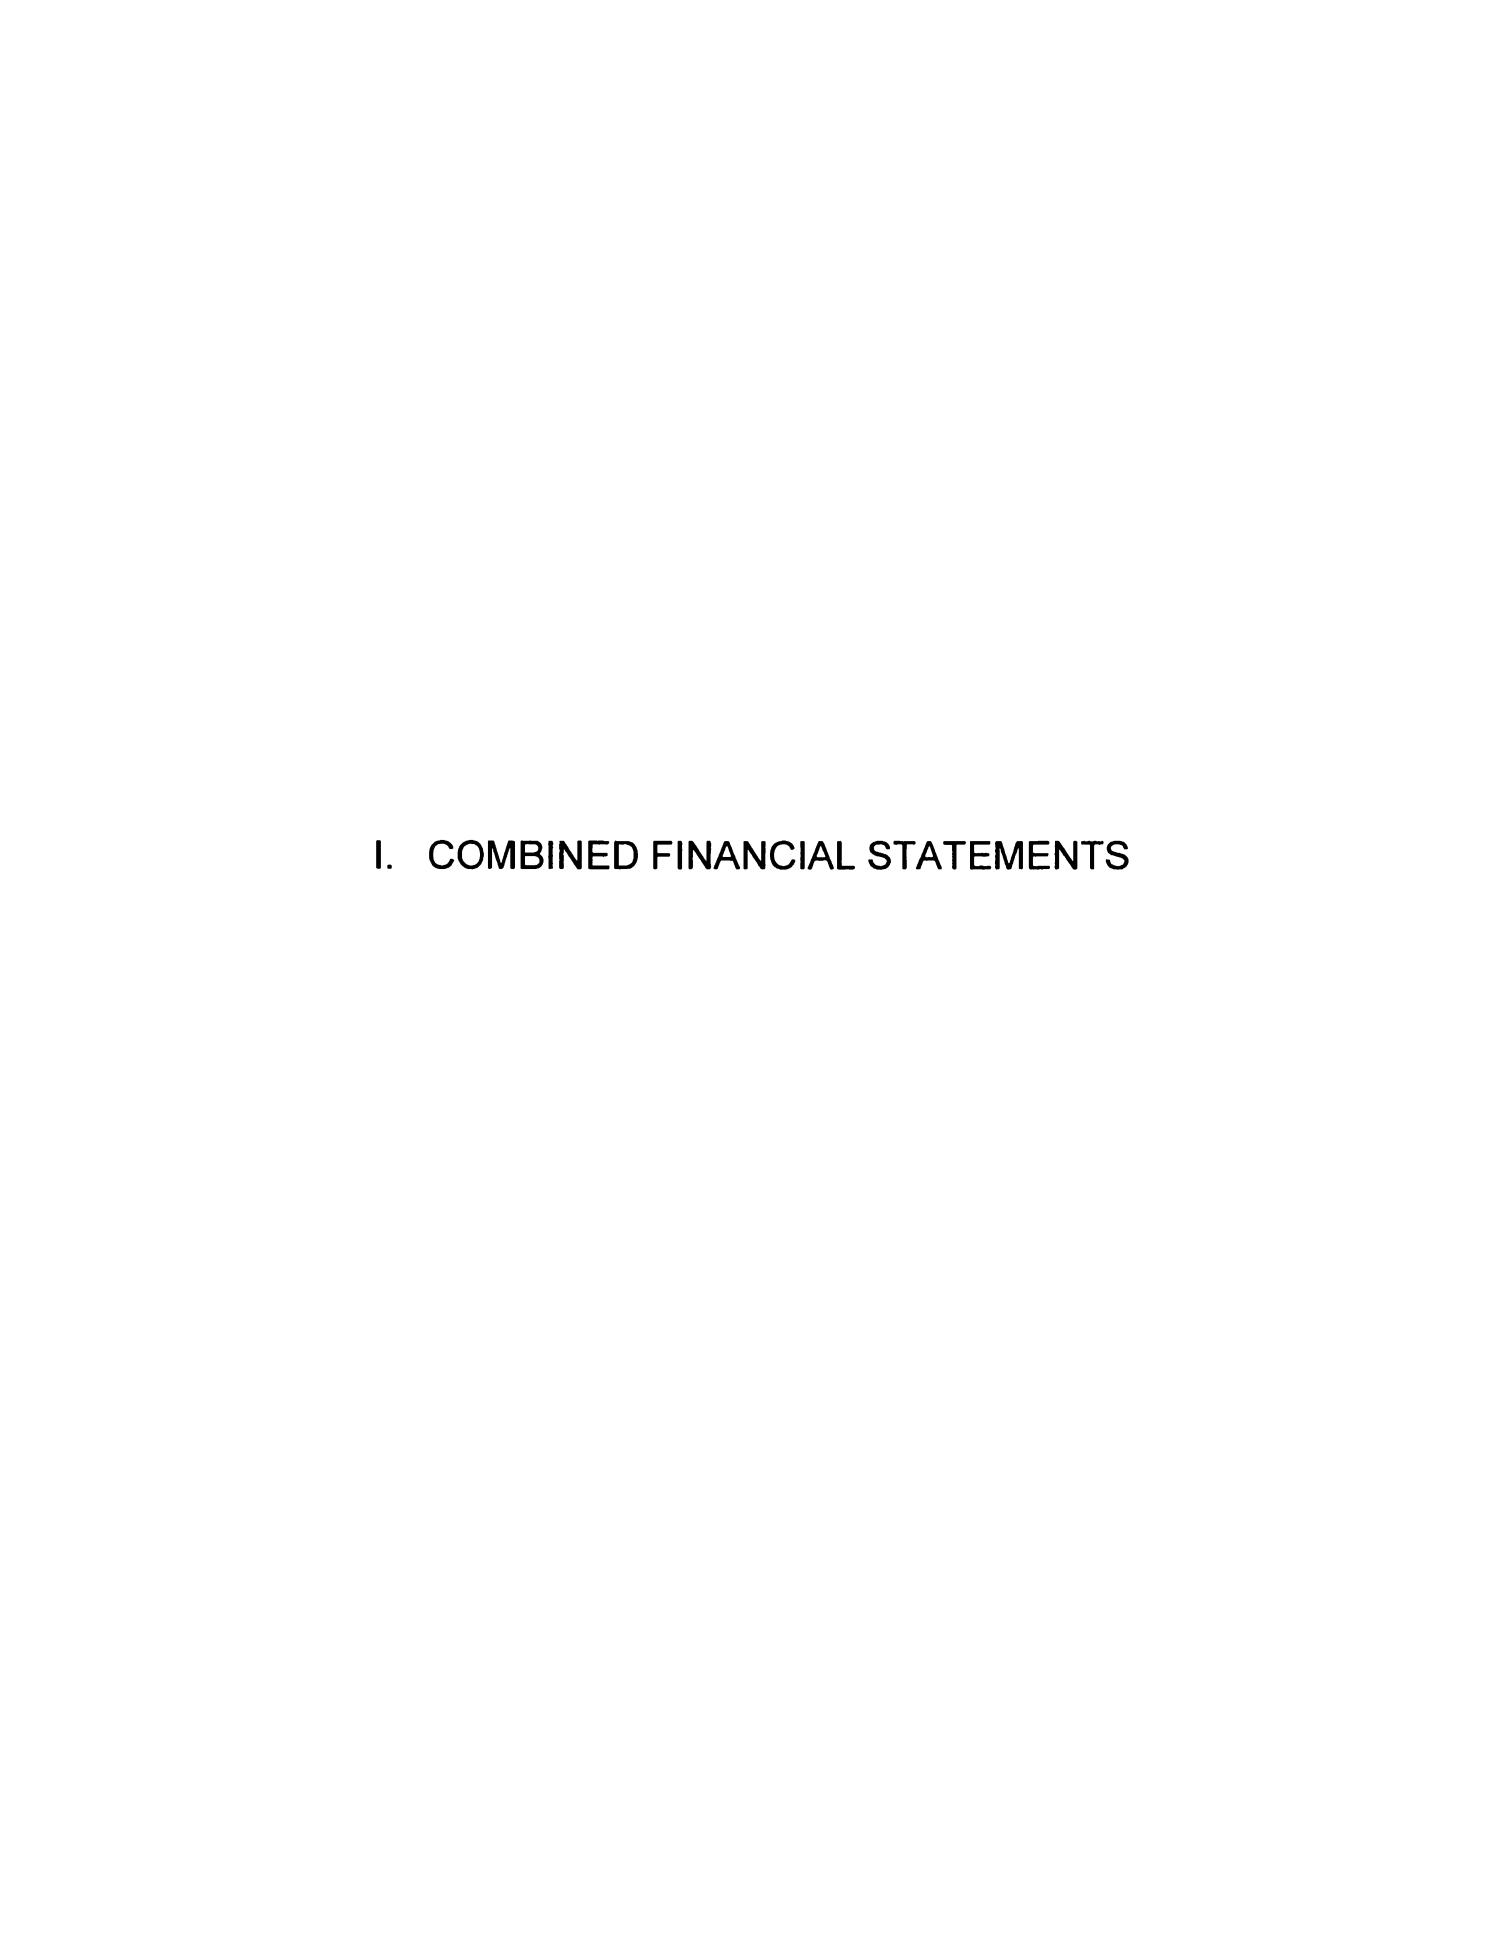 Texas State Board of Public Accountancy Annual Financial Report: 2012
                                                
                                                    None
                                                